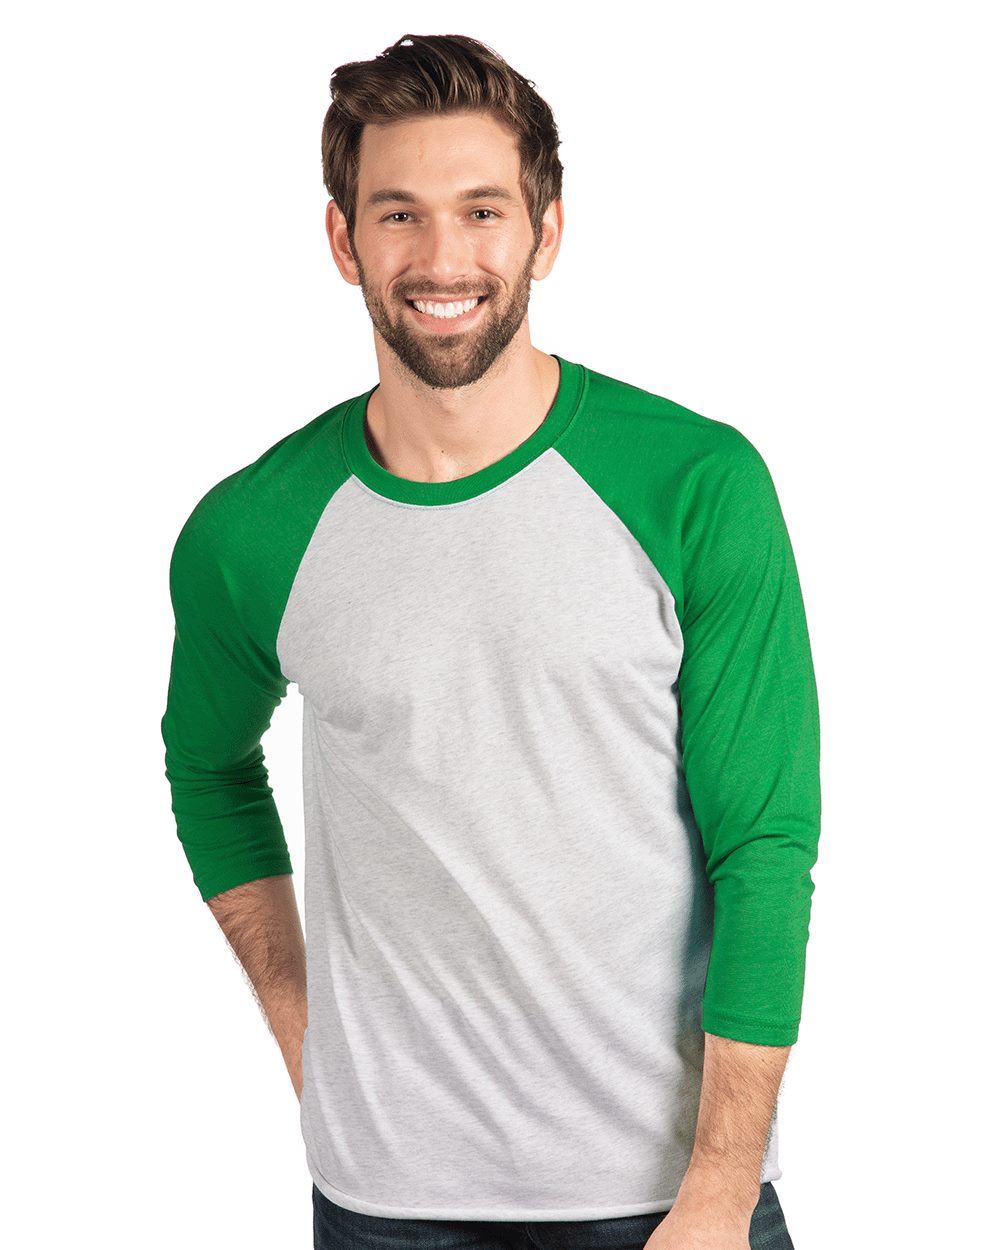 Unisex 3/4 Sleeve Raglan Shirt - Tultex 245